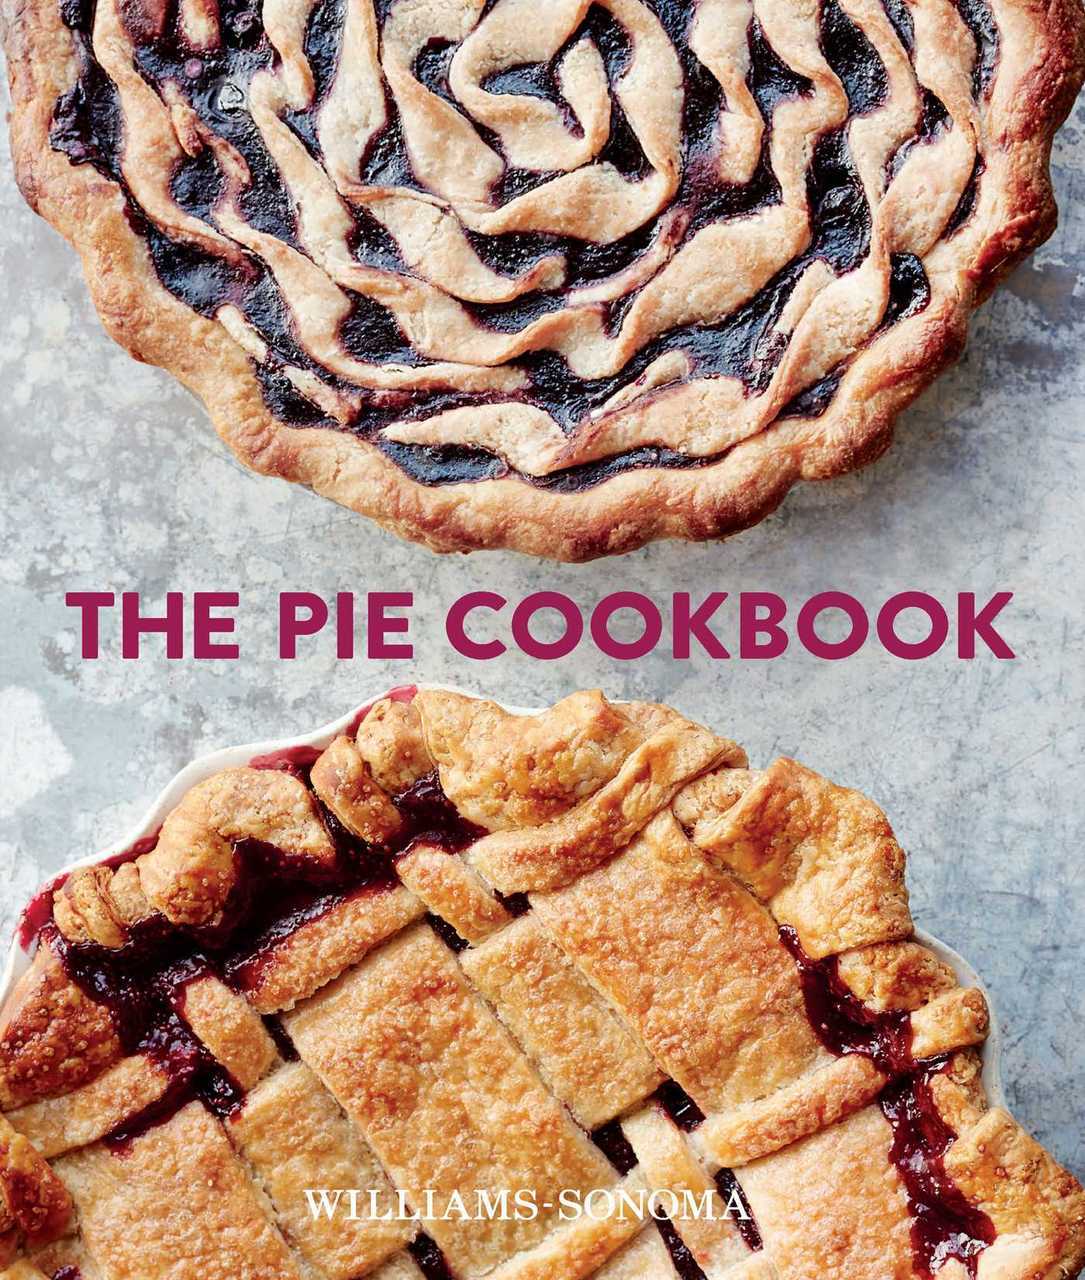 The Pie Cookbook